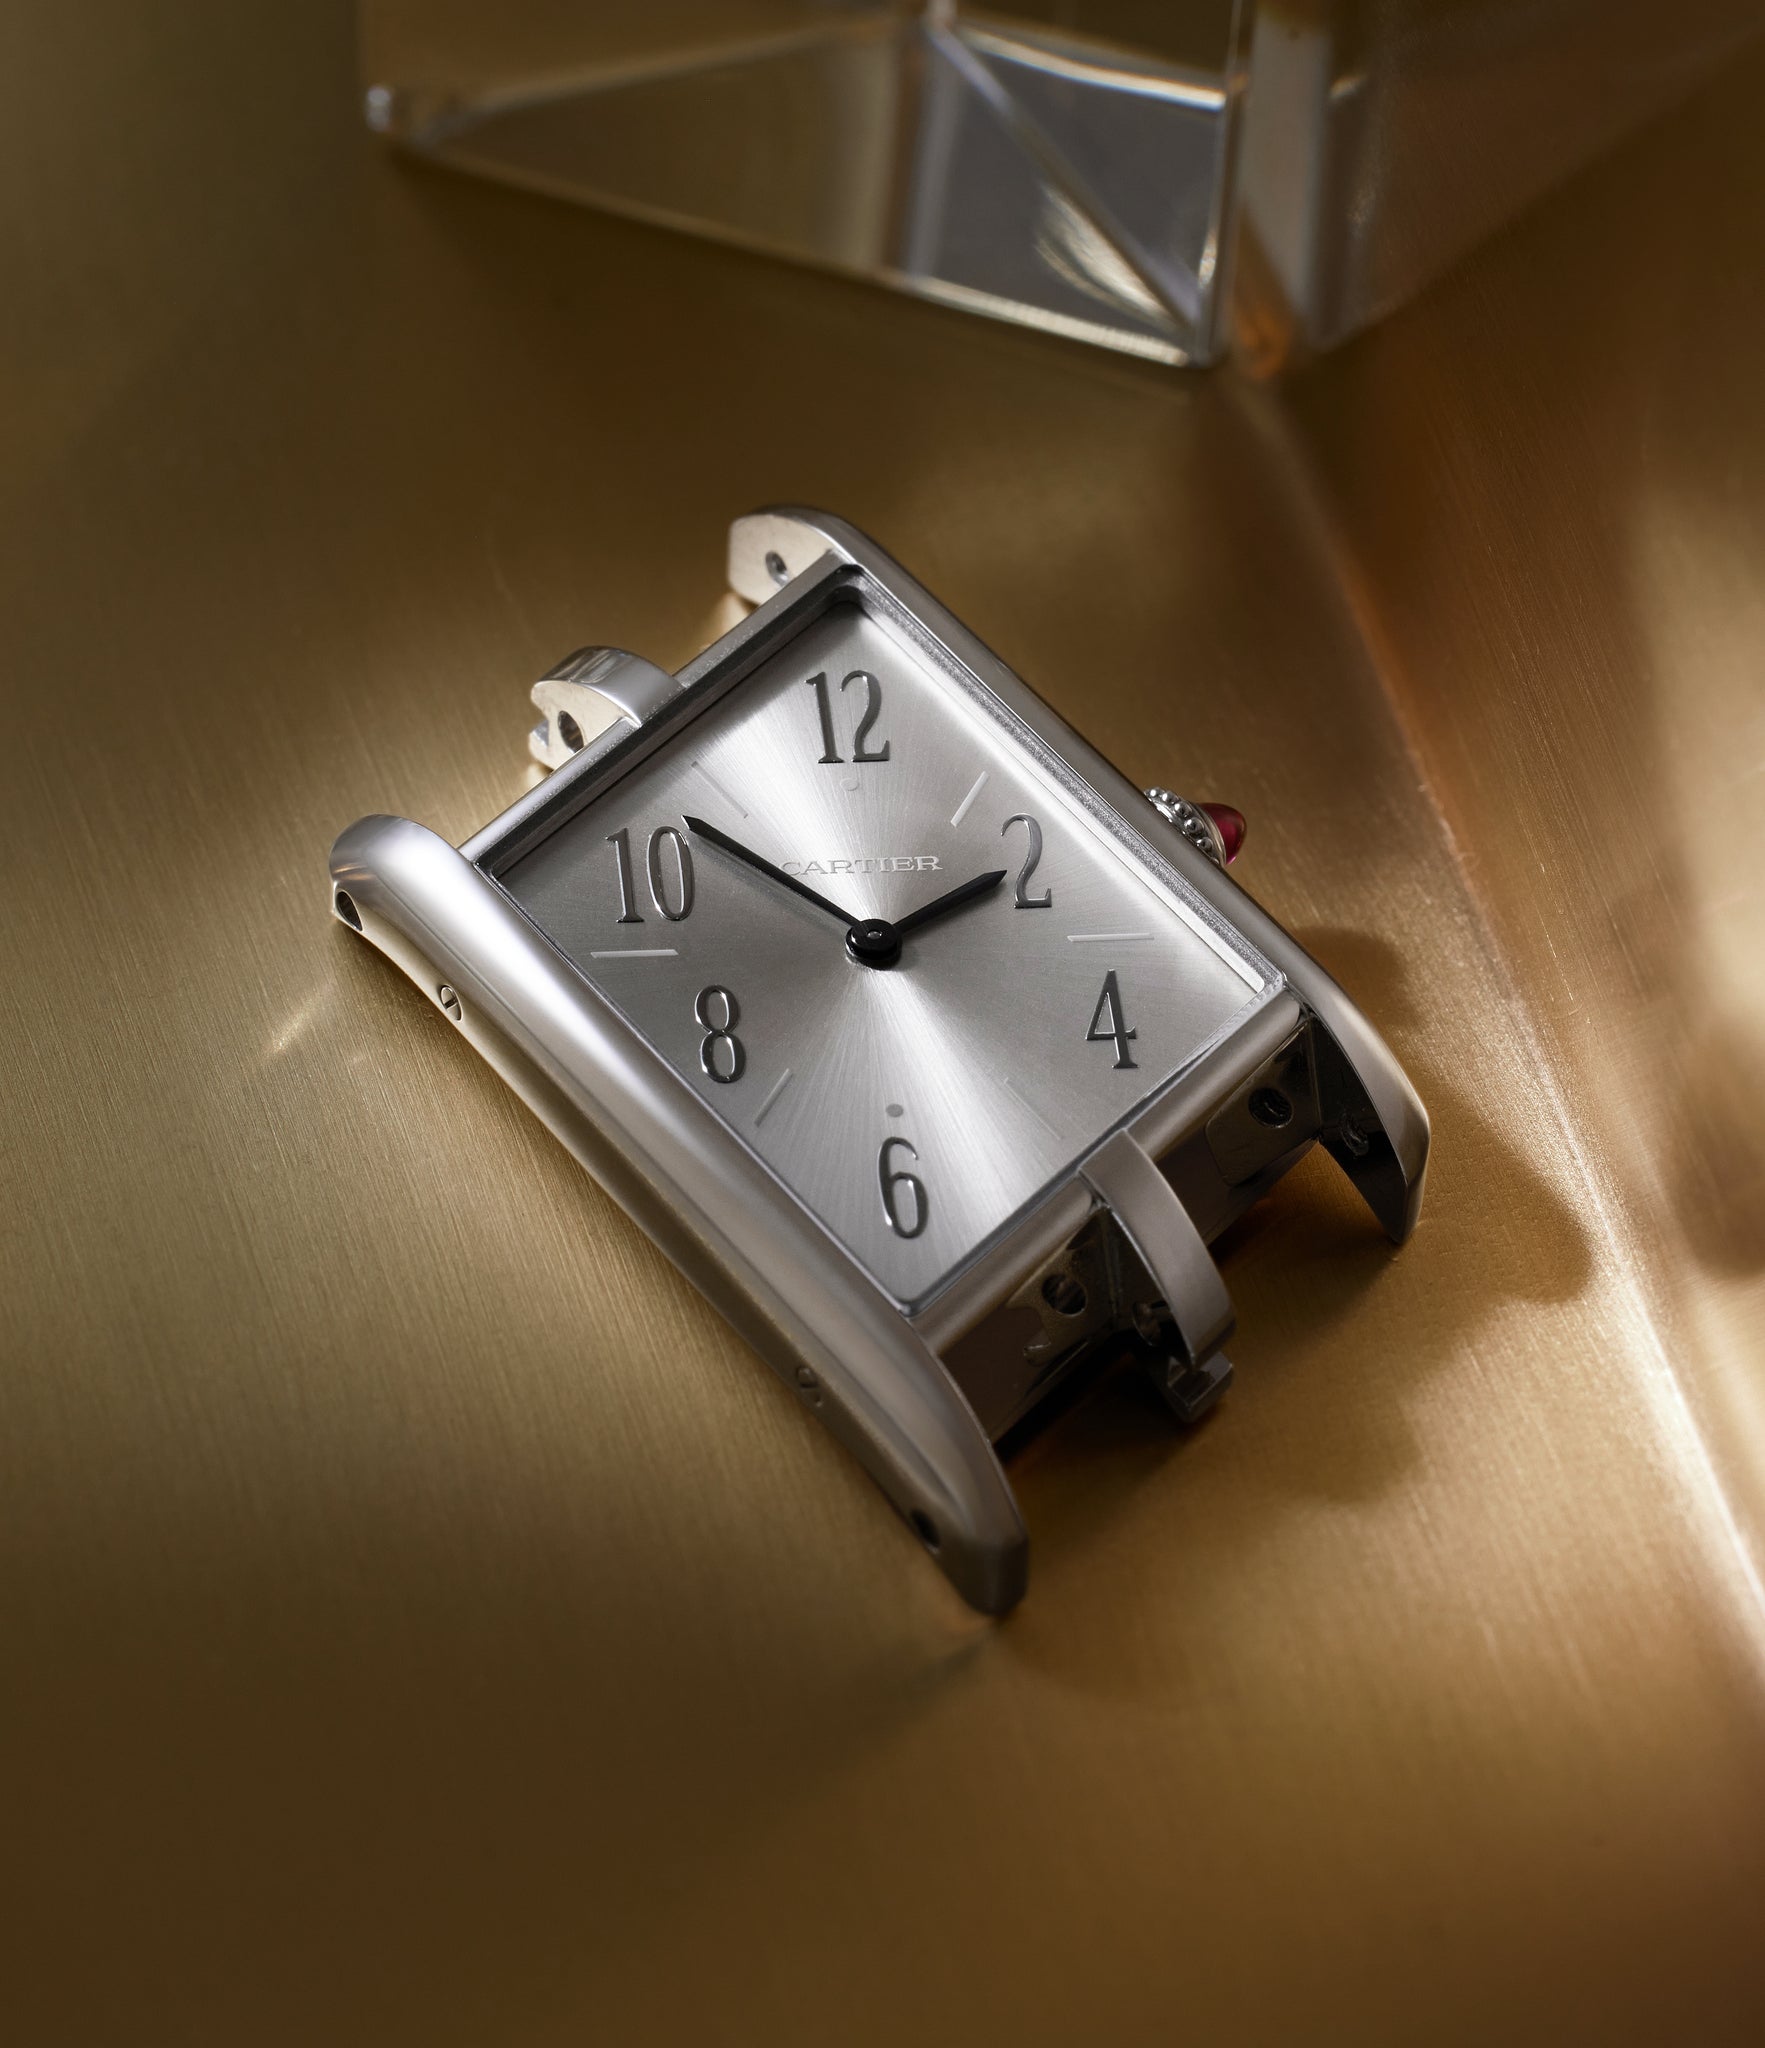 Platinum Cartier Asymétrique WGTA0042  preowned watch at A Collected Man London